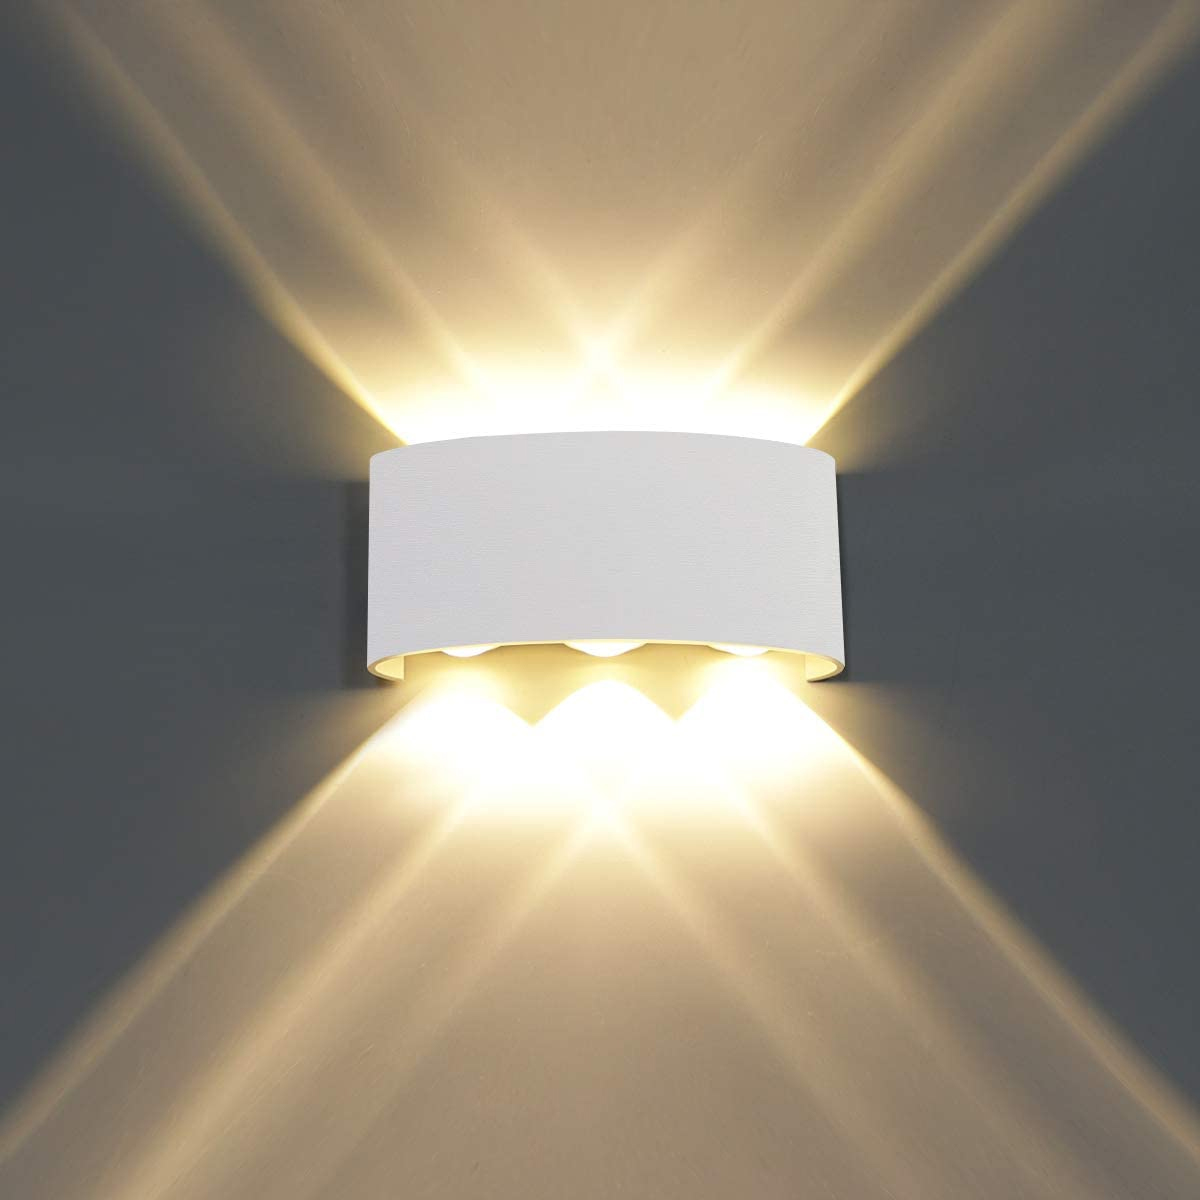 Waterproof-2-8W-LED-Wall-Light-Up-Down-Lighting-Sconce-Lamp-Indoor-Outdoor-IP65-1850910-15